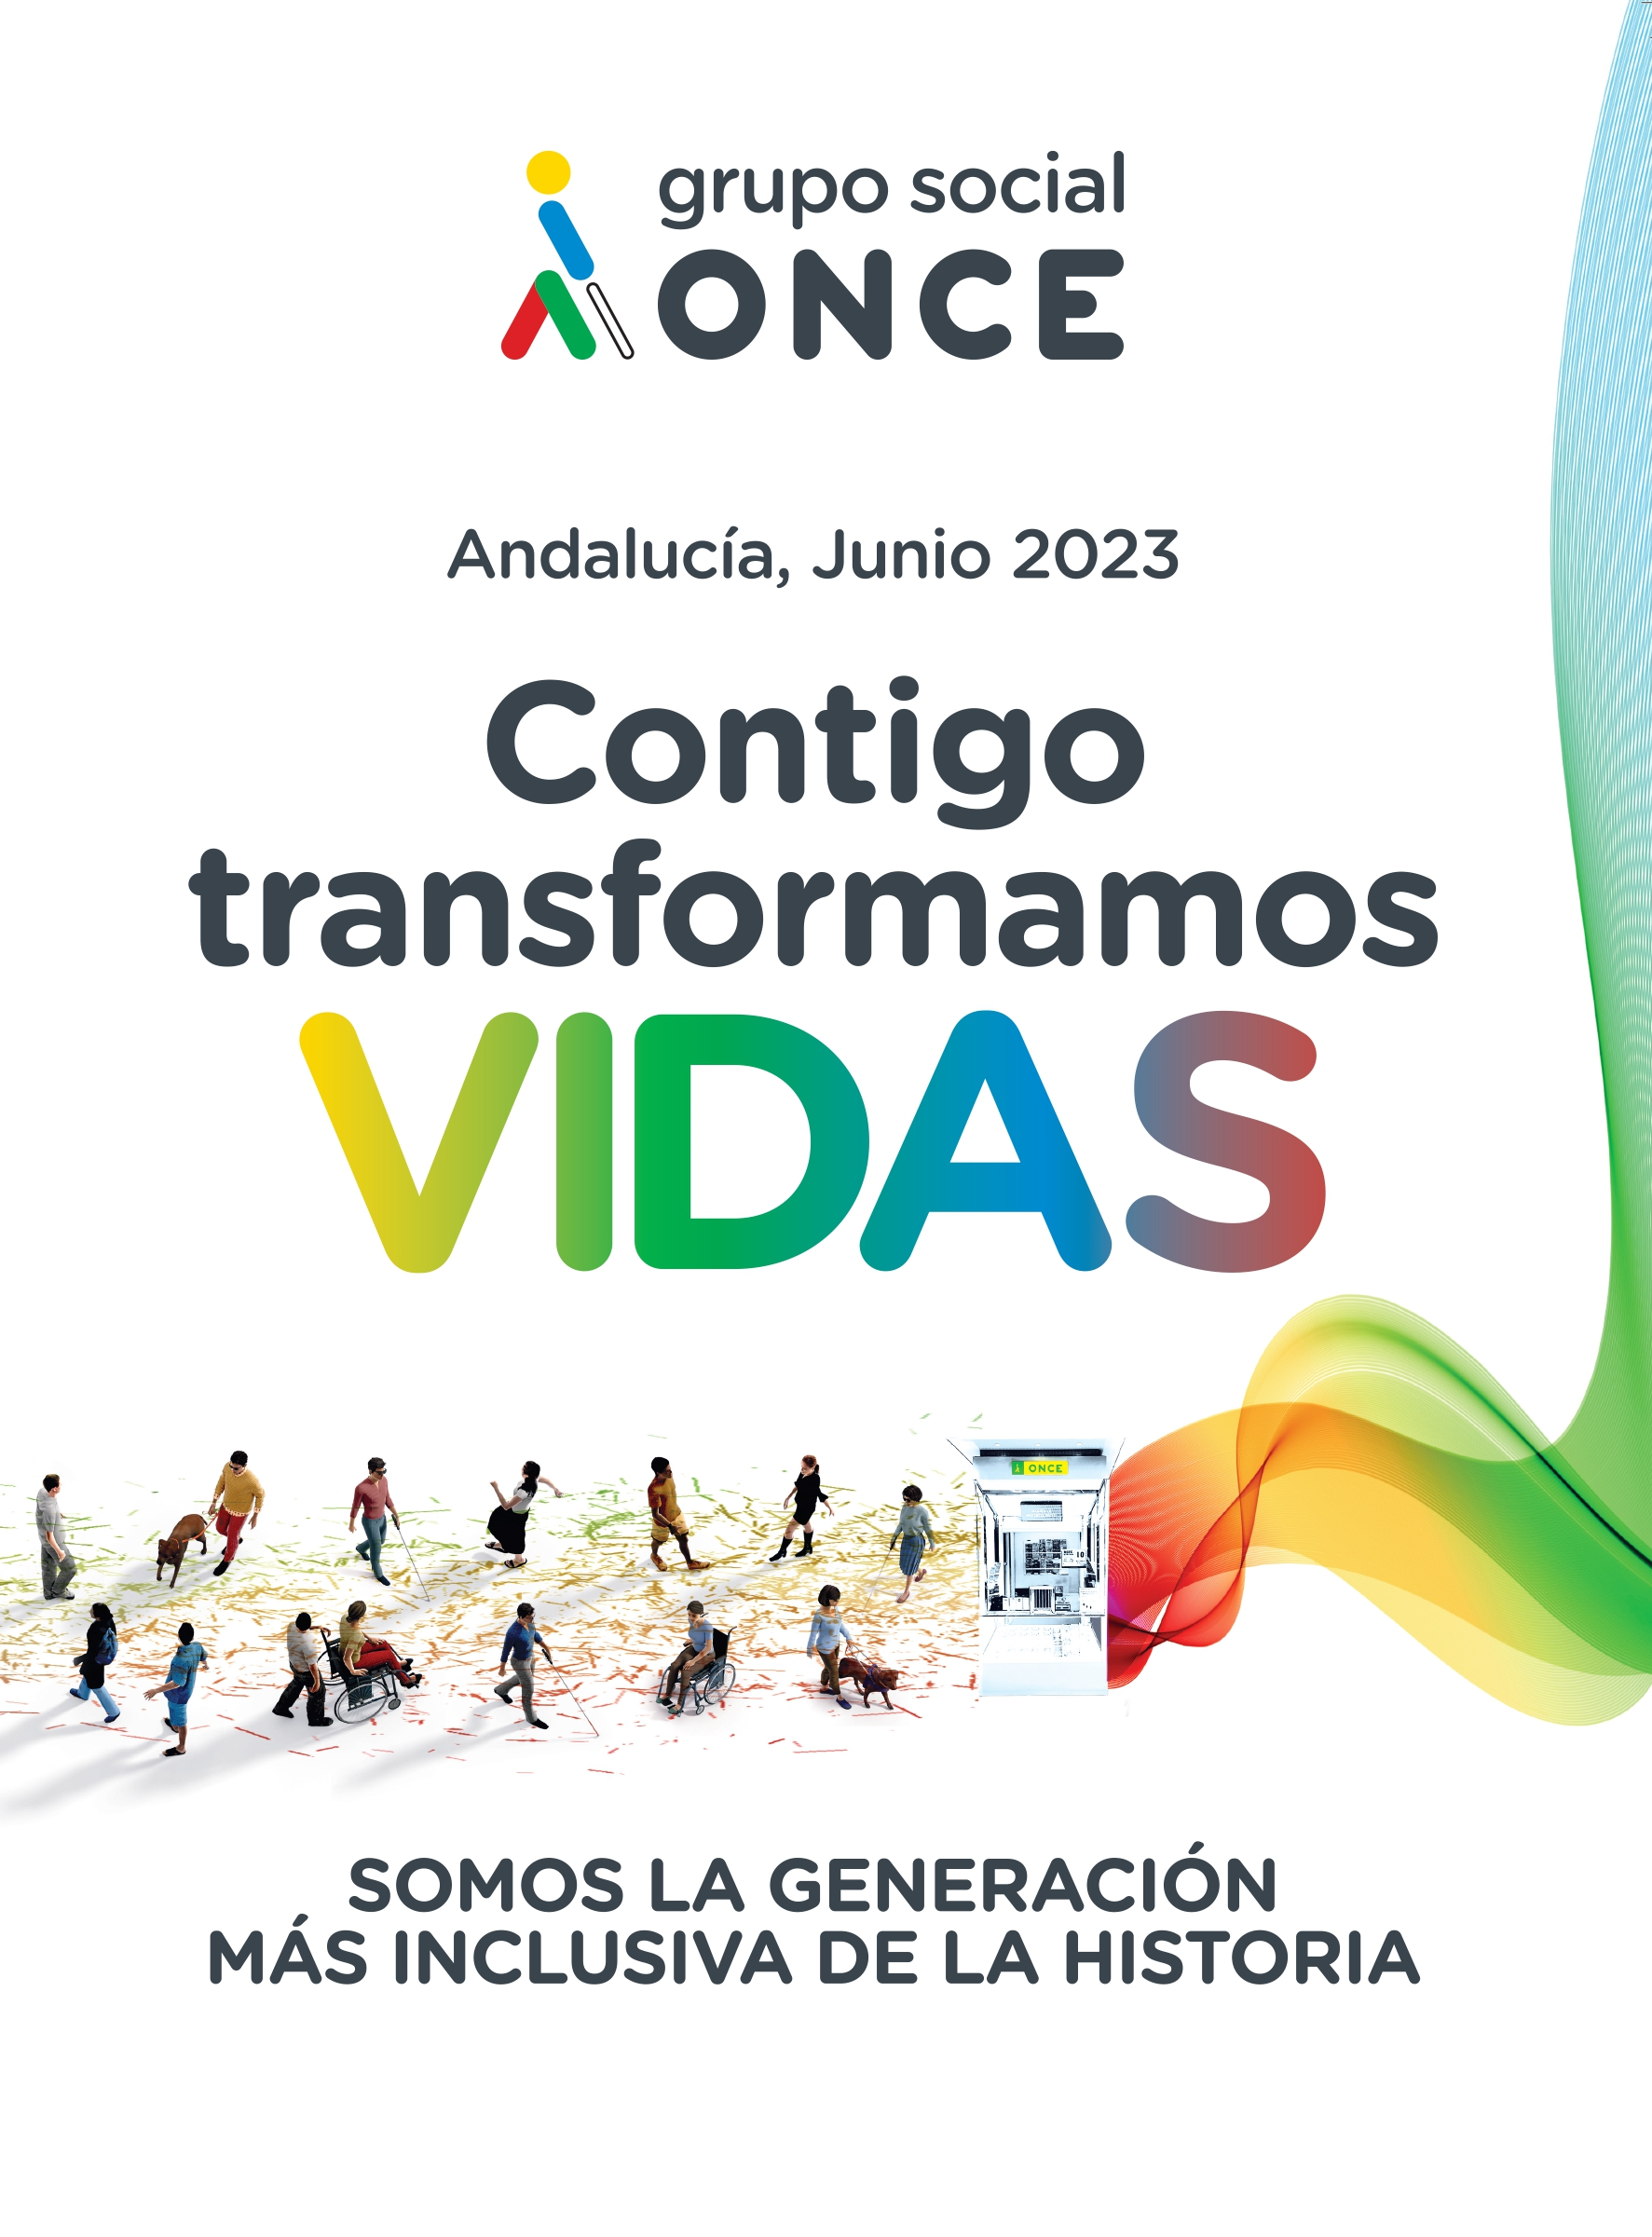 Cartel de la Semana del Grupo Social ONCE en Andalucía